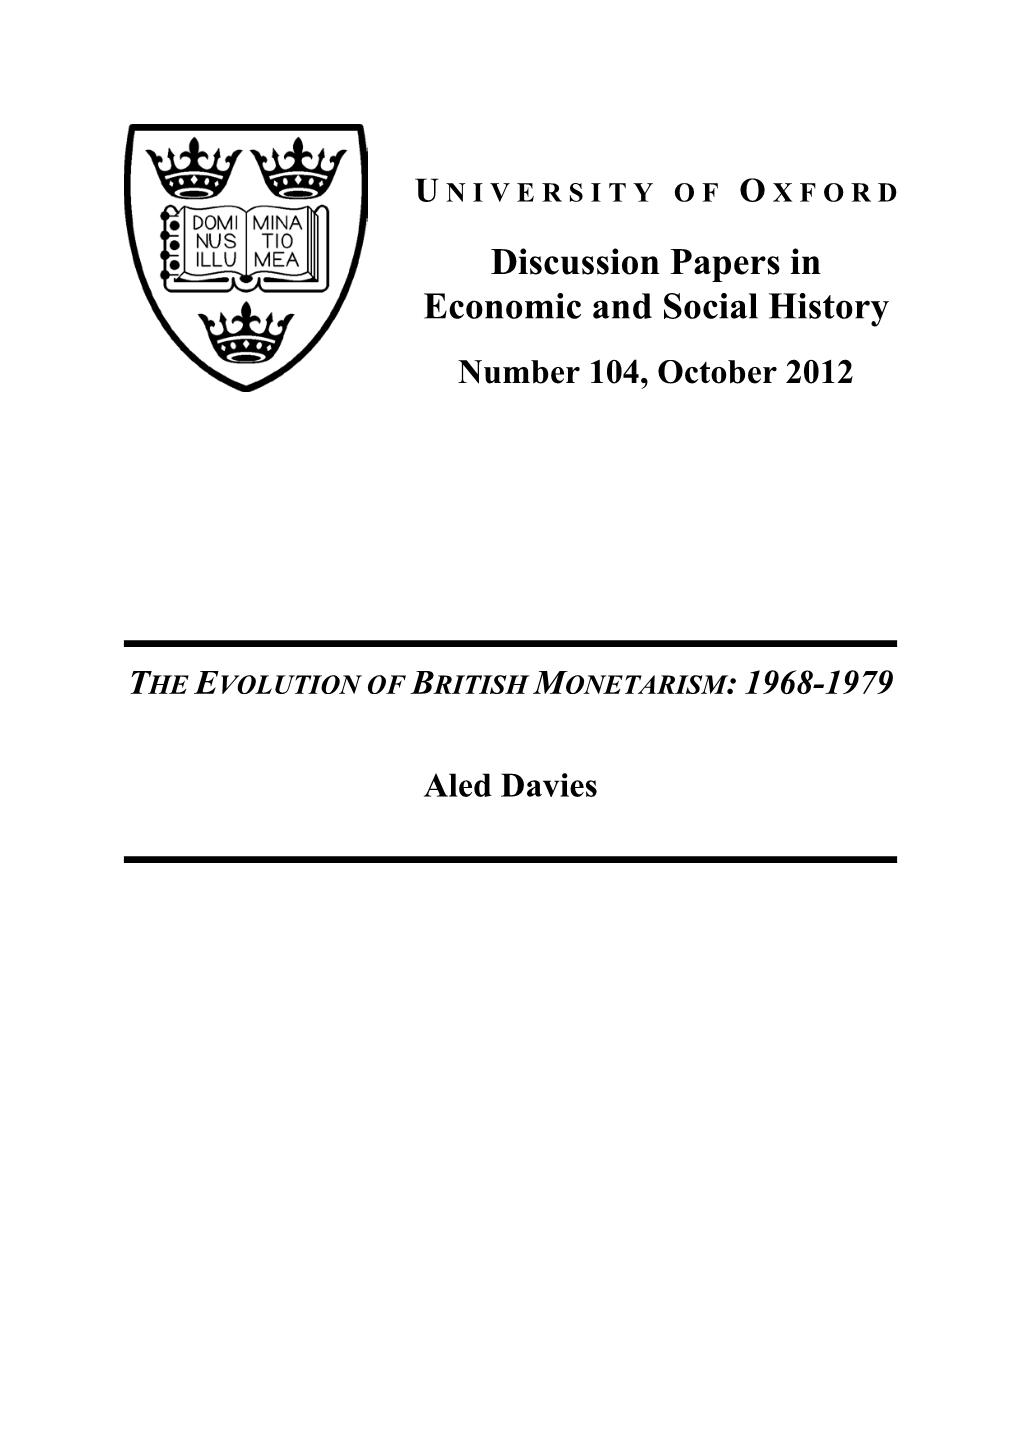 The Evolution of British Monetarism: 1968-1979